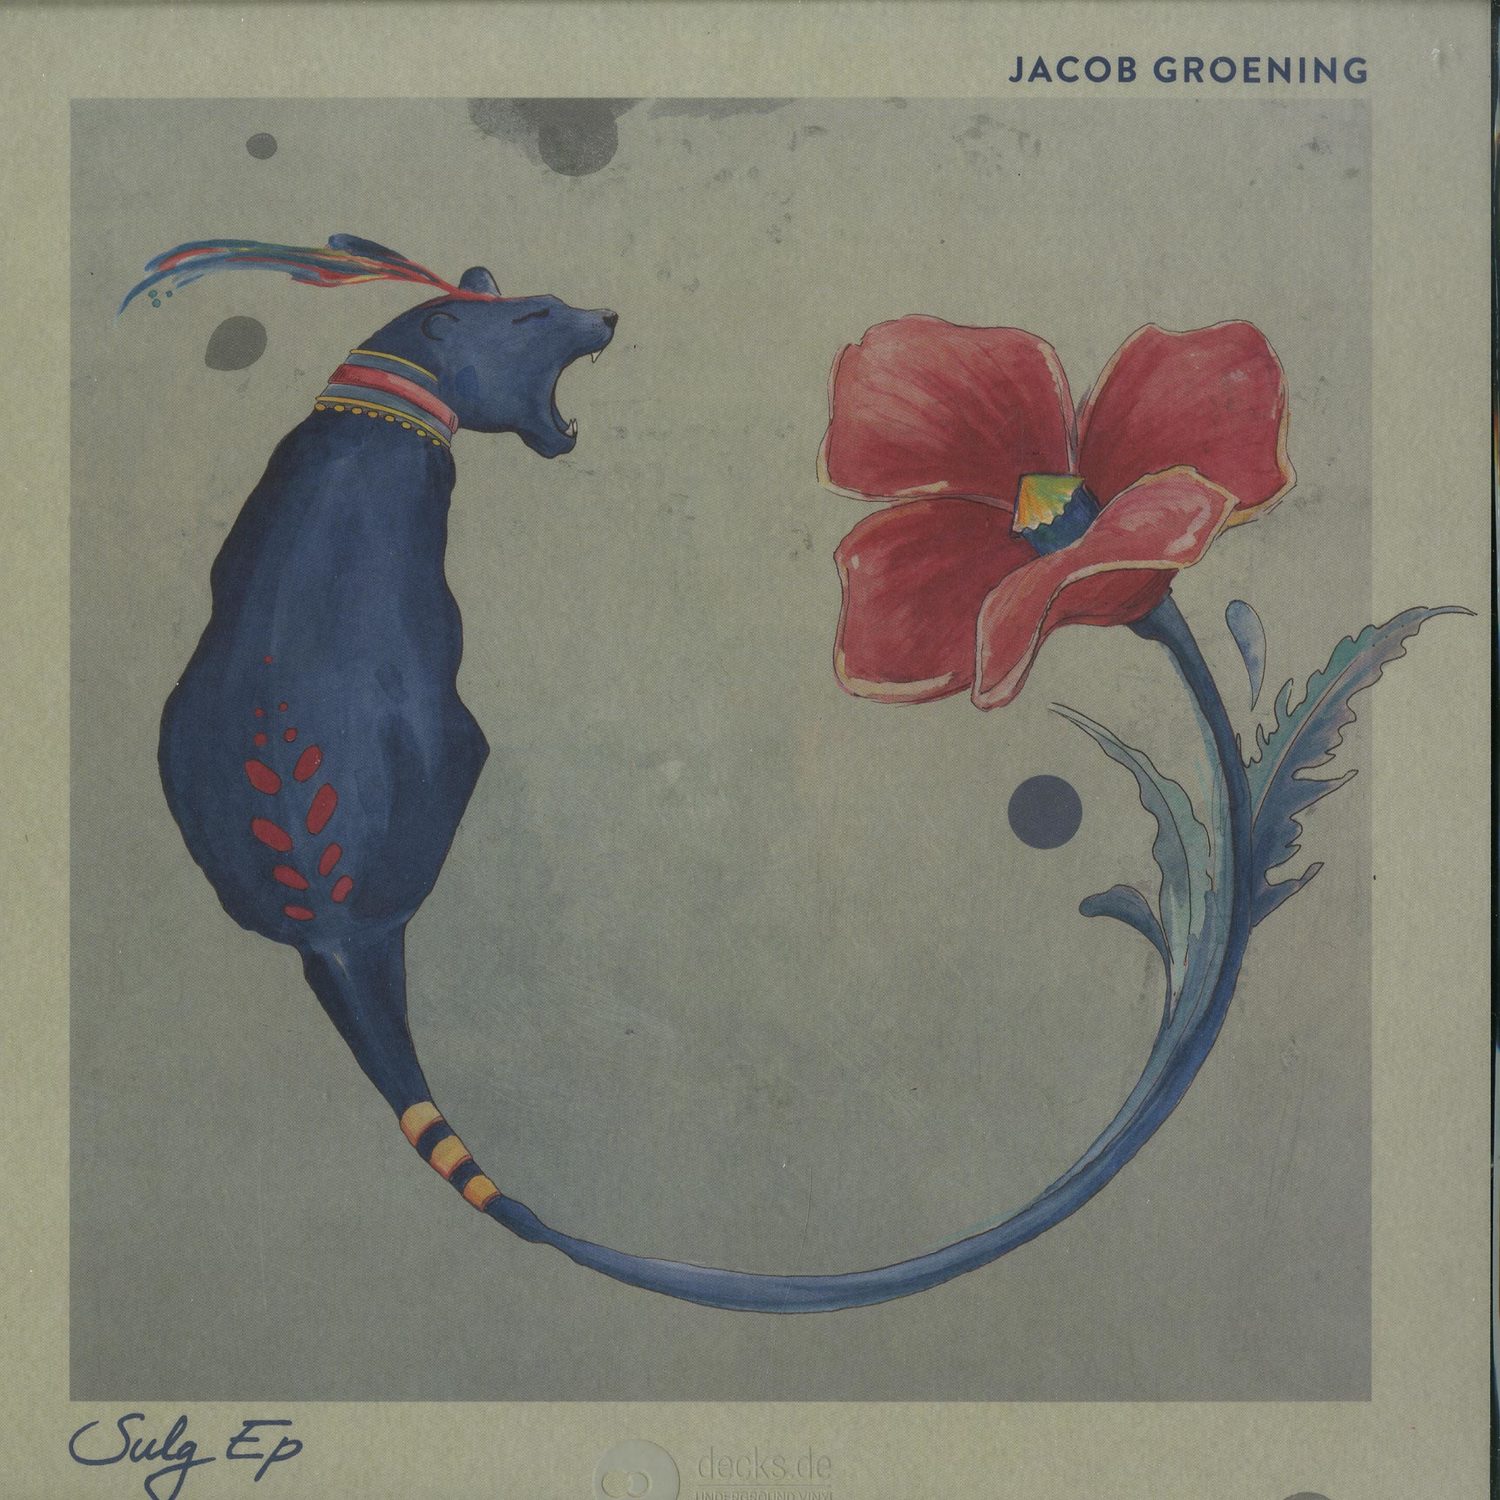 Jacob Groening - SULG EP